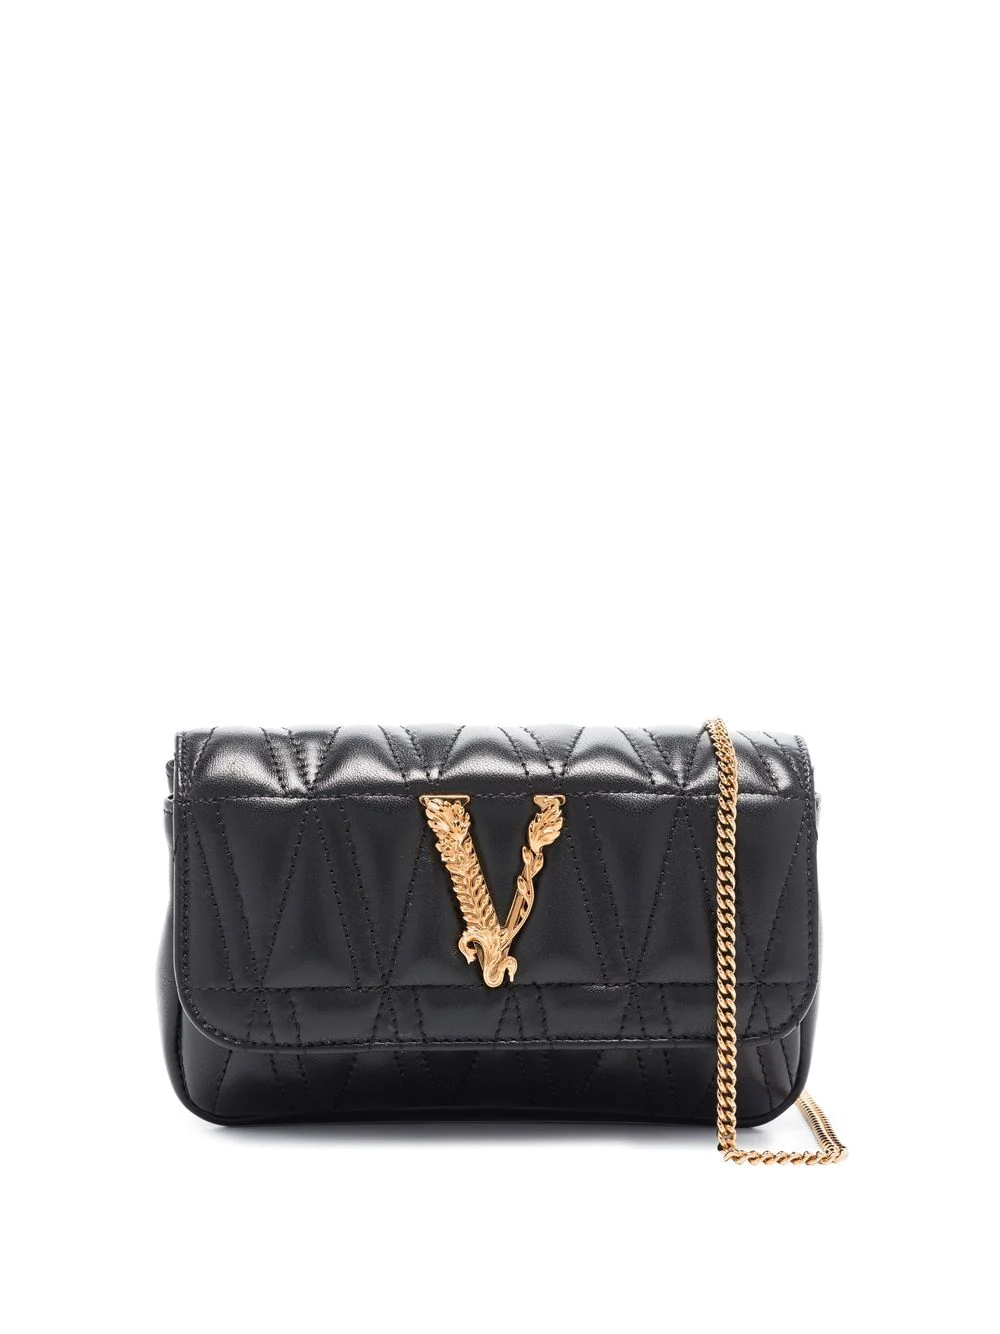 Versace Black Virtus Camera Bag